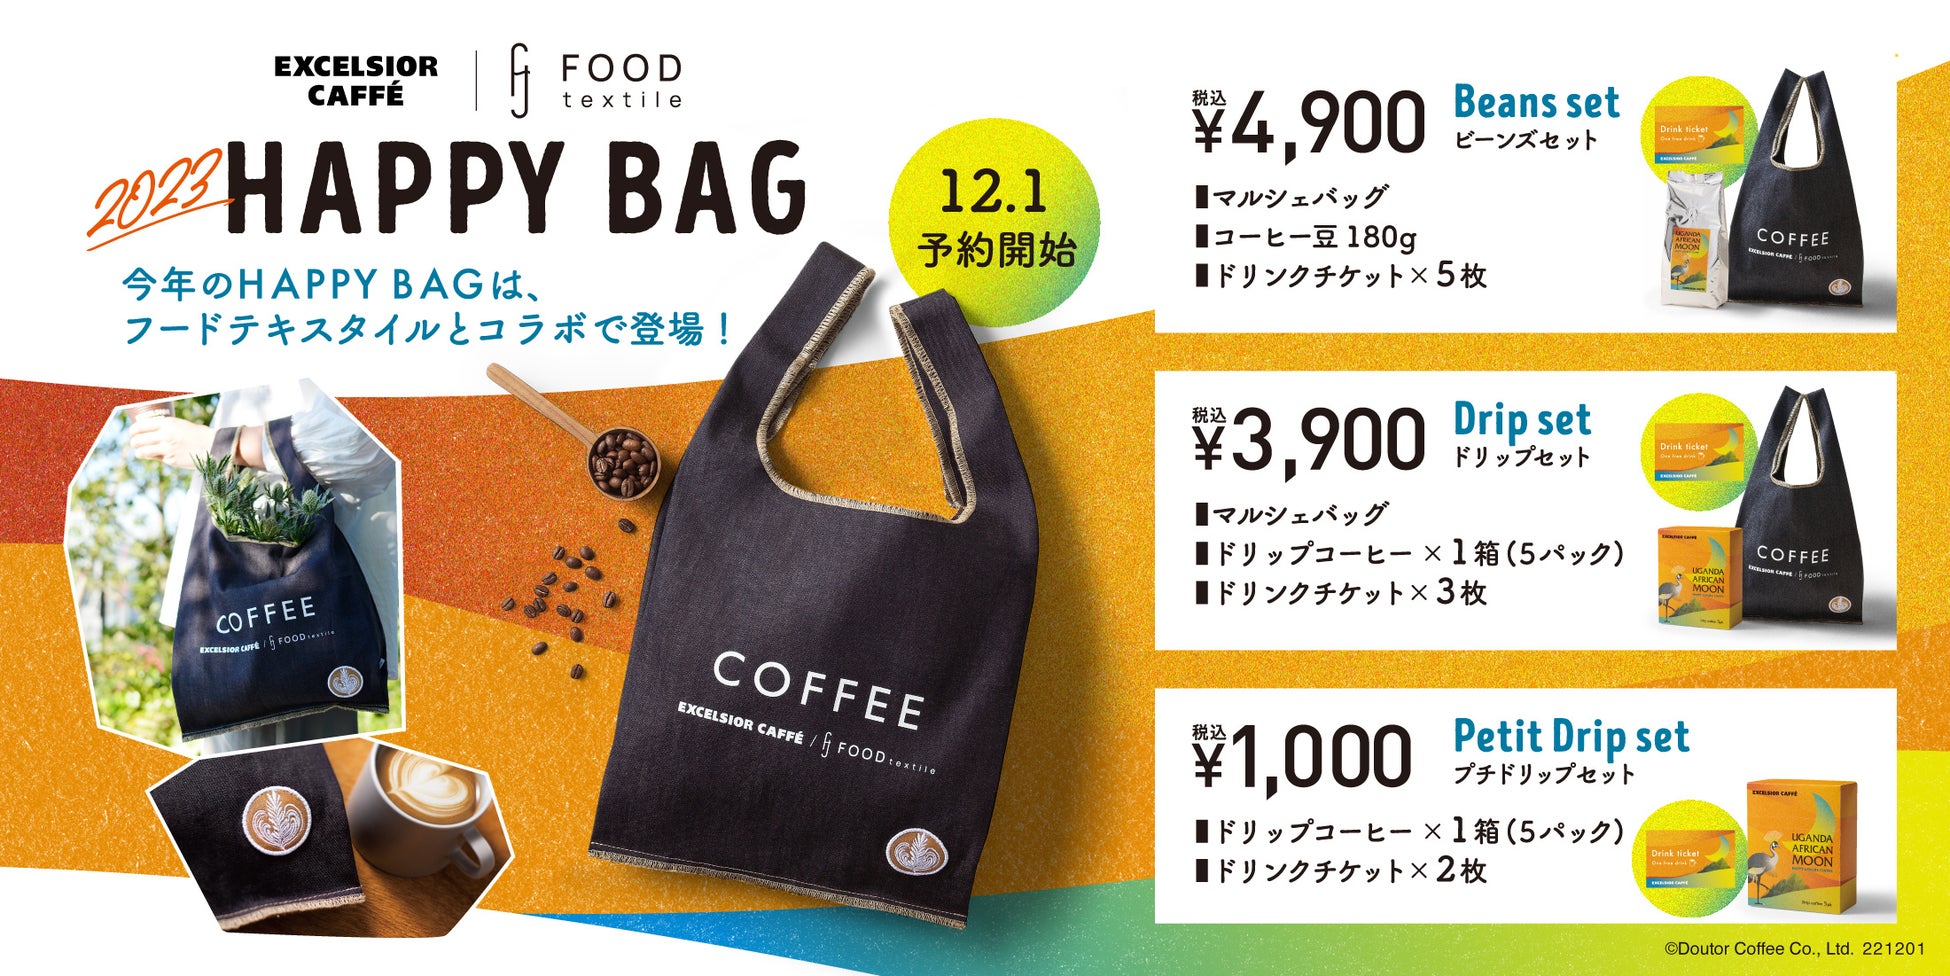 “FOOD TEXTILE”とのコラボバッグ！「2023 HAPPY BAG」　エクセルシオール カフェで12月1日（木）から予約開始